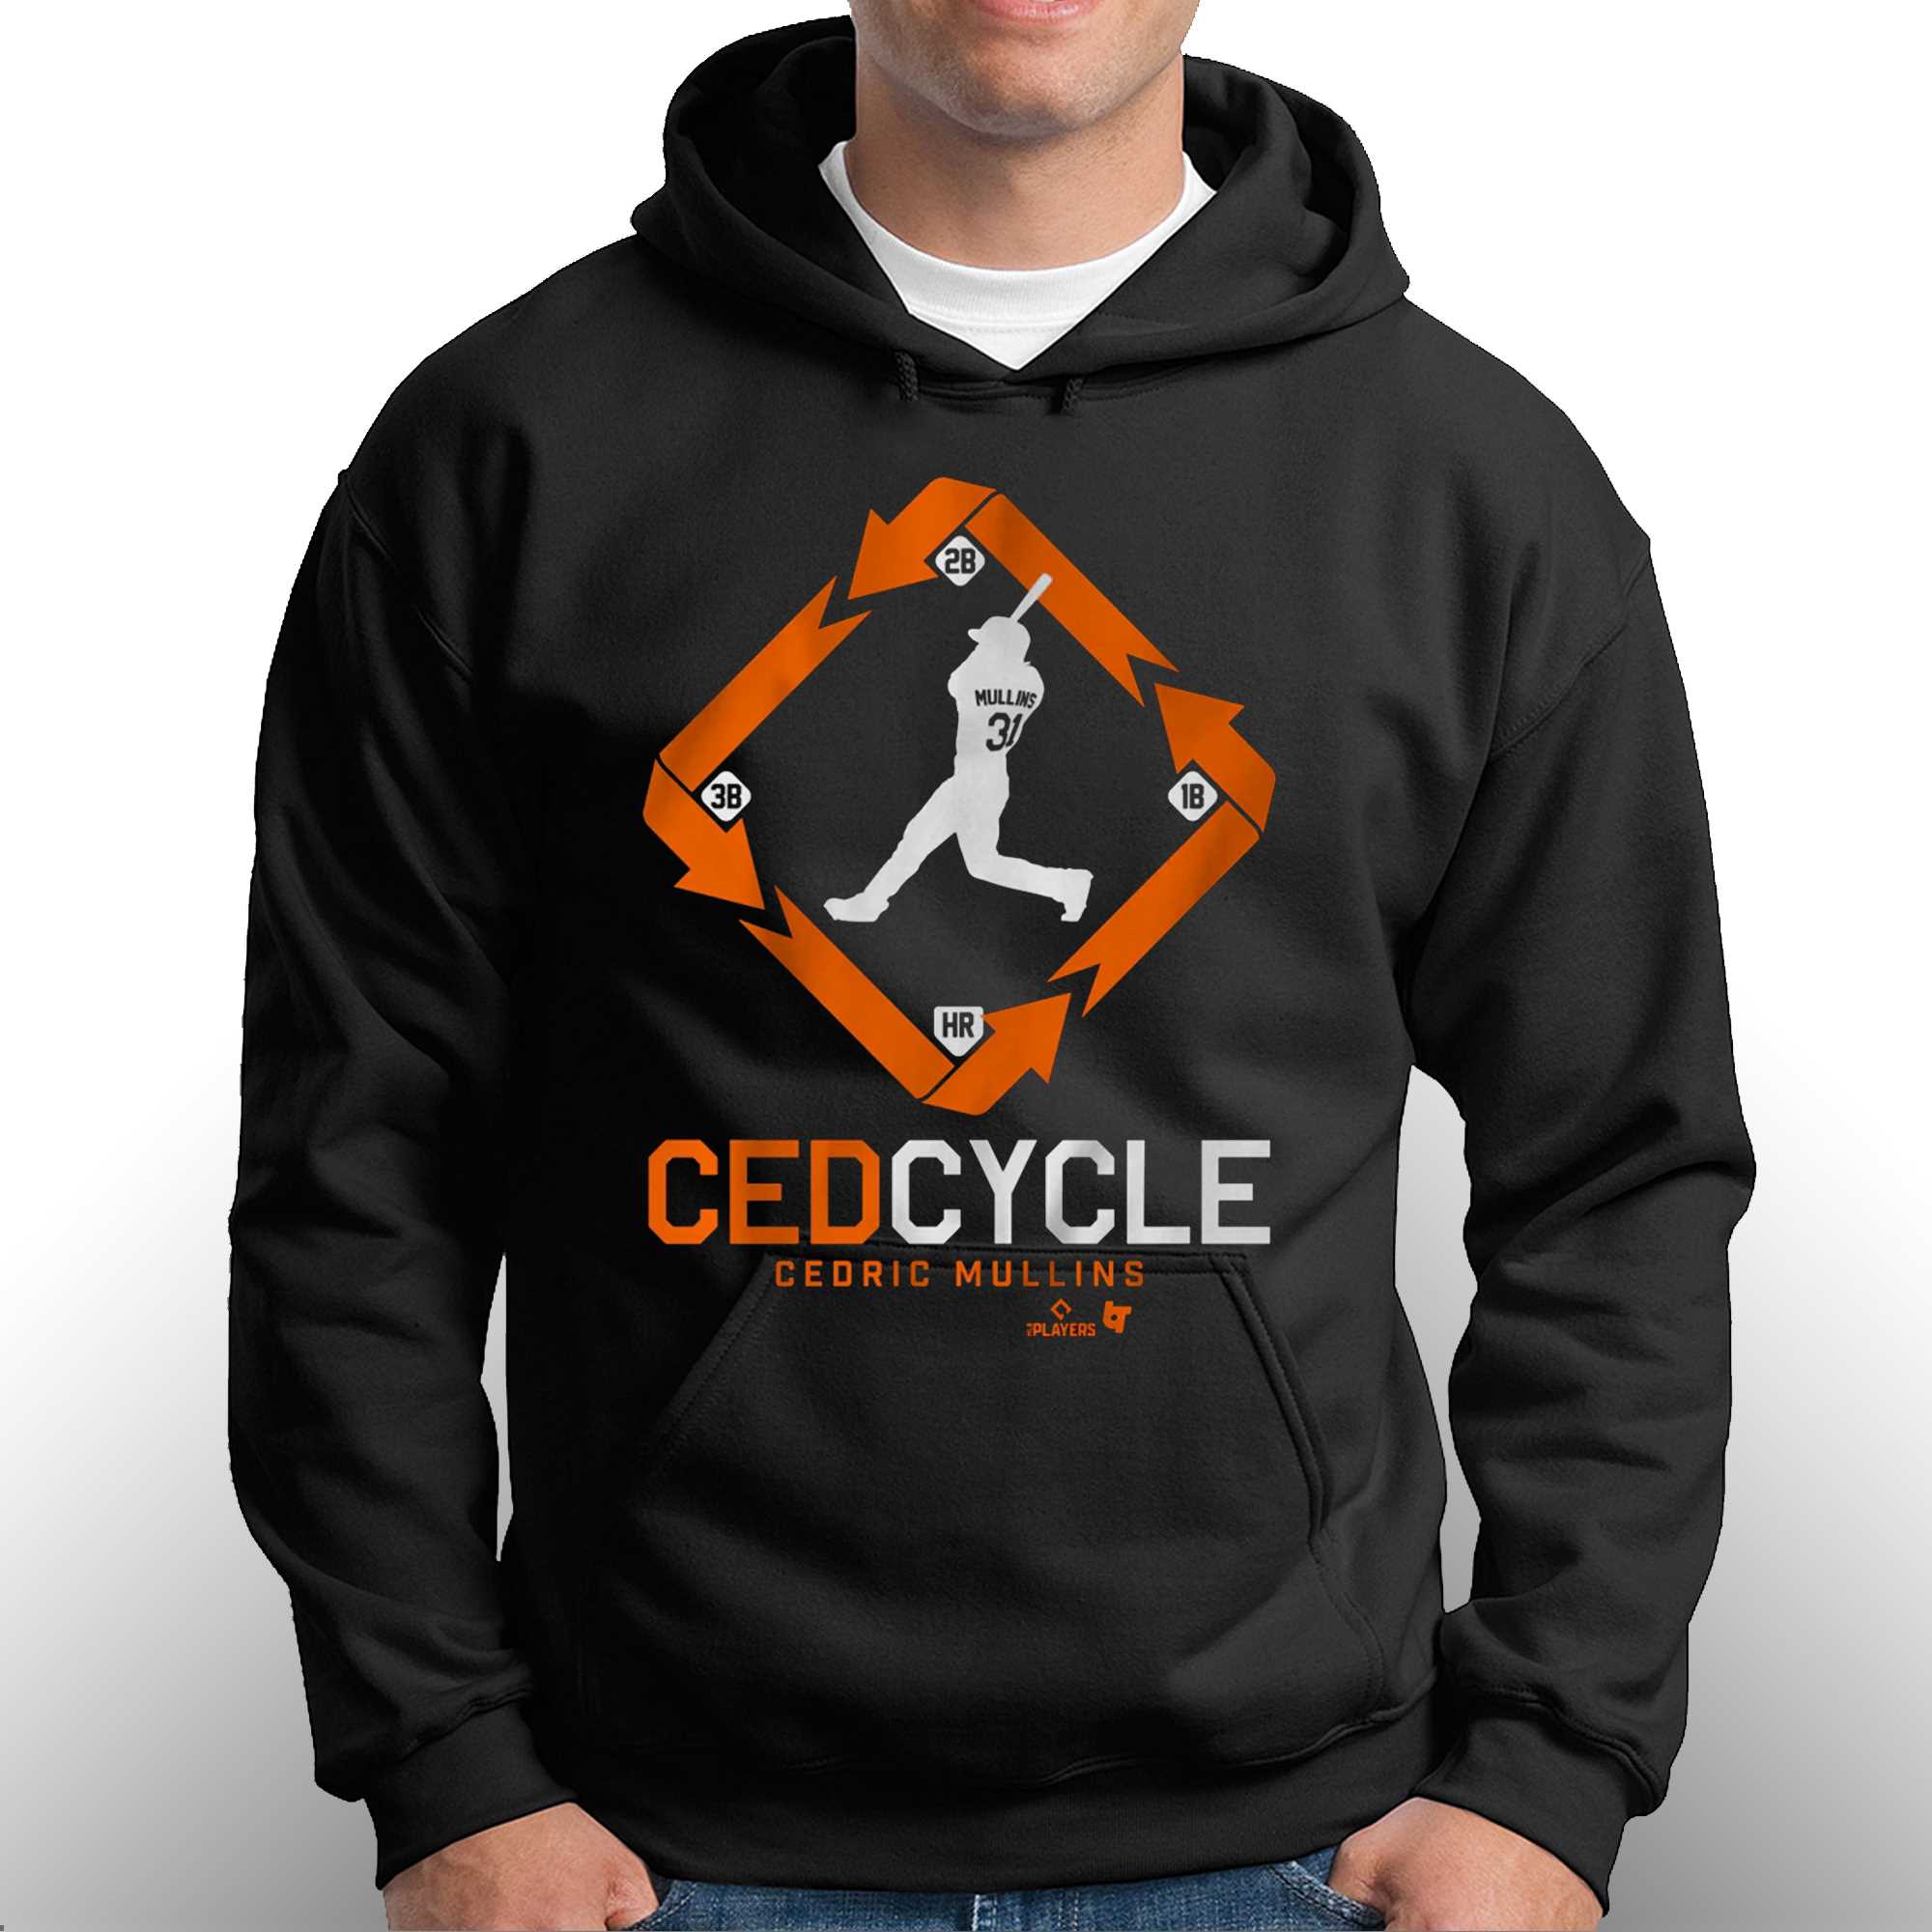 Cedric Mullins Cycle T-shirt - Shibtee Clothing